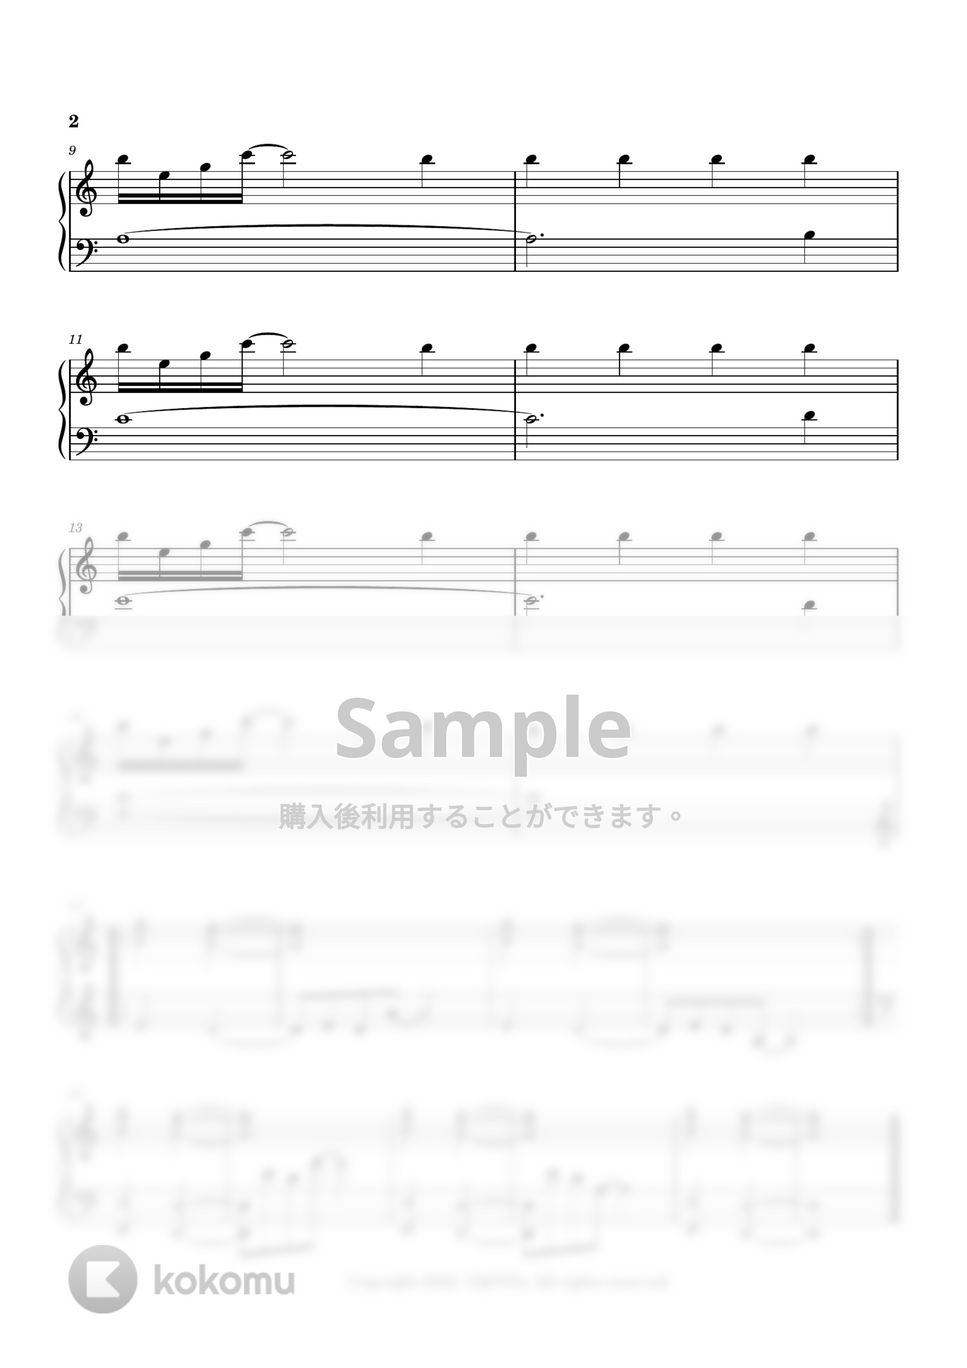 Seiji Kameda - 絶望と向き合う彼女 (今夜、世界からこの恋が消えても track 17) by 今日ピアノ(Oneul Piano)